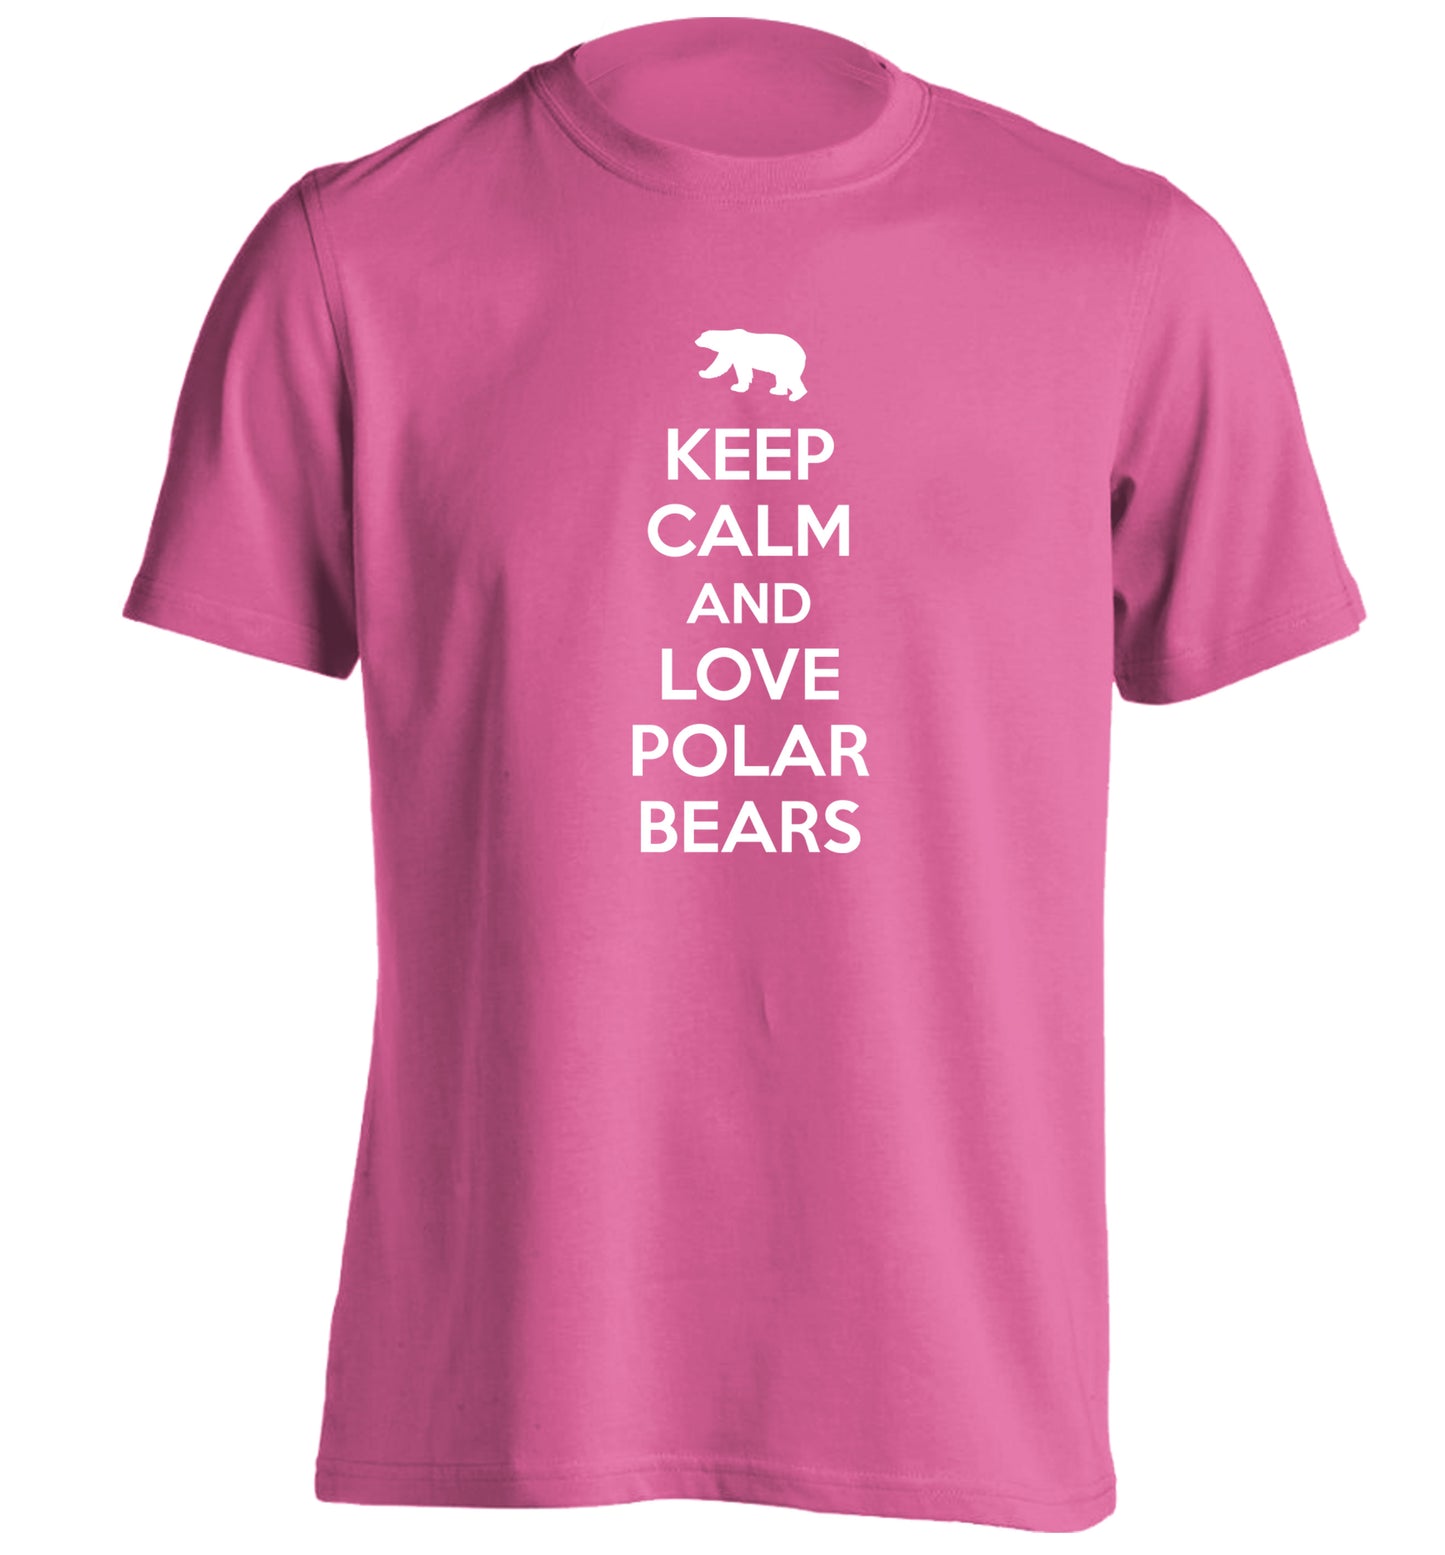 Keep calm and love polar bears adults unisex pink Tshirt 2XL